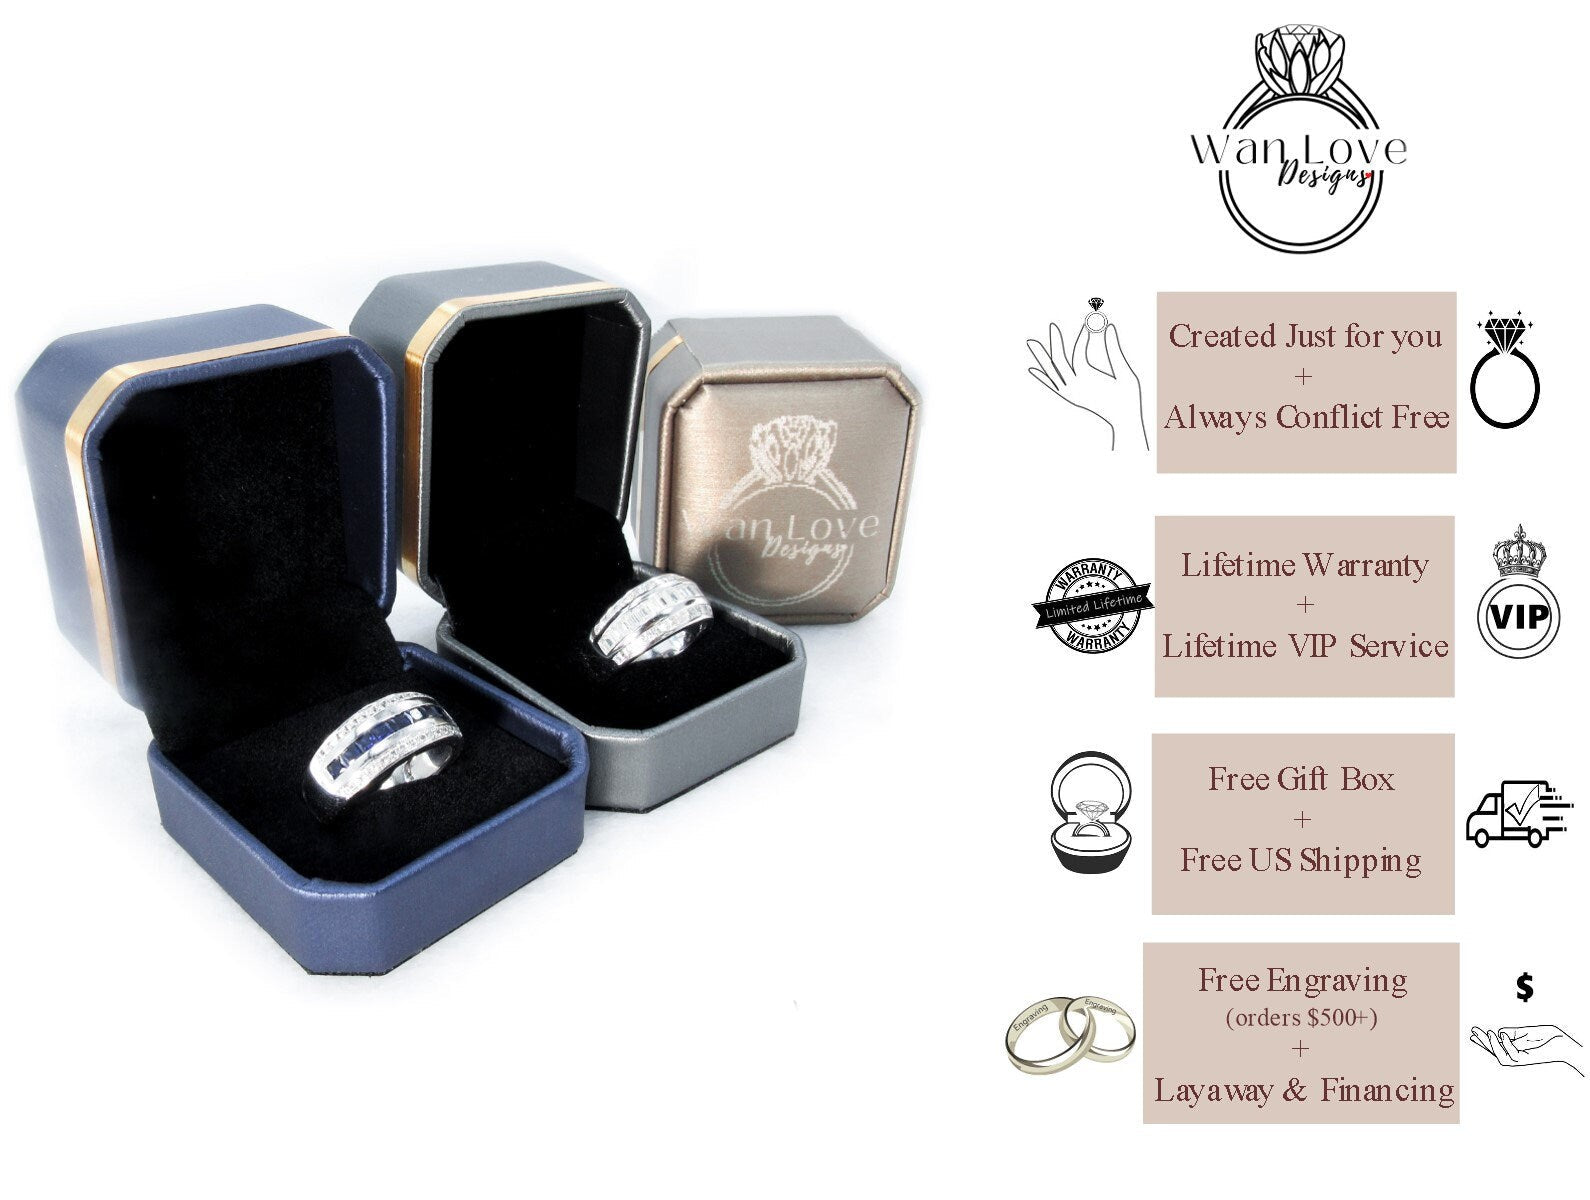 Men's 3 Gem Stone Moissanite Sapphire Wedding Band, 2 tone Gold Grooved Tungsten Wedding Ring, Mens Engagement Ring Wedding, Man Anniversary Wan Love Designs